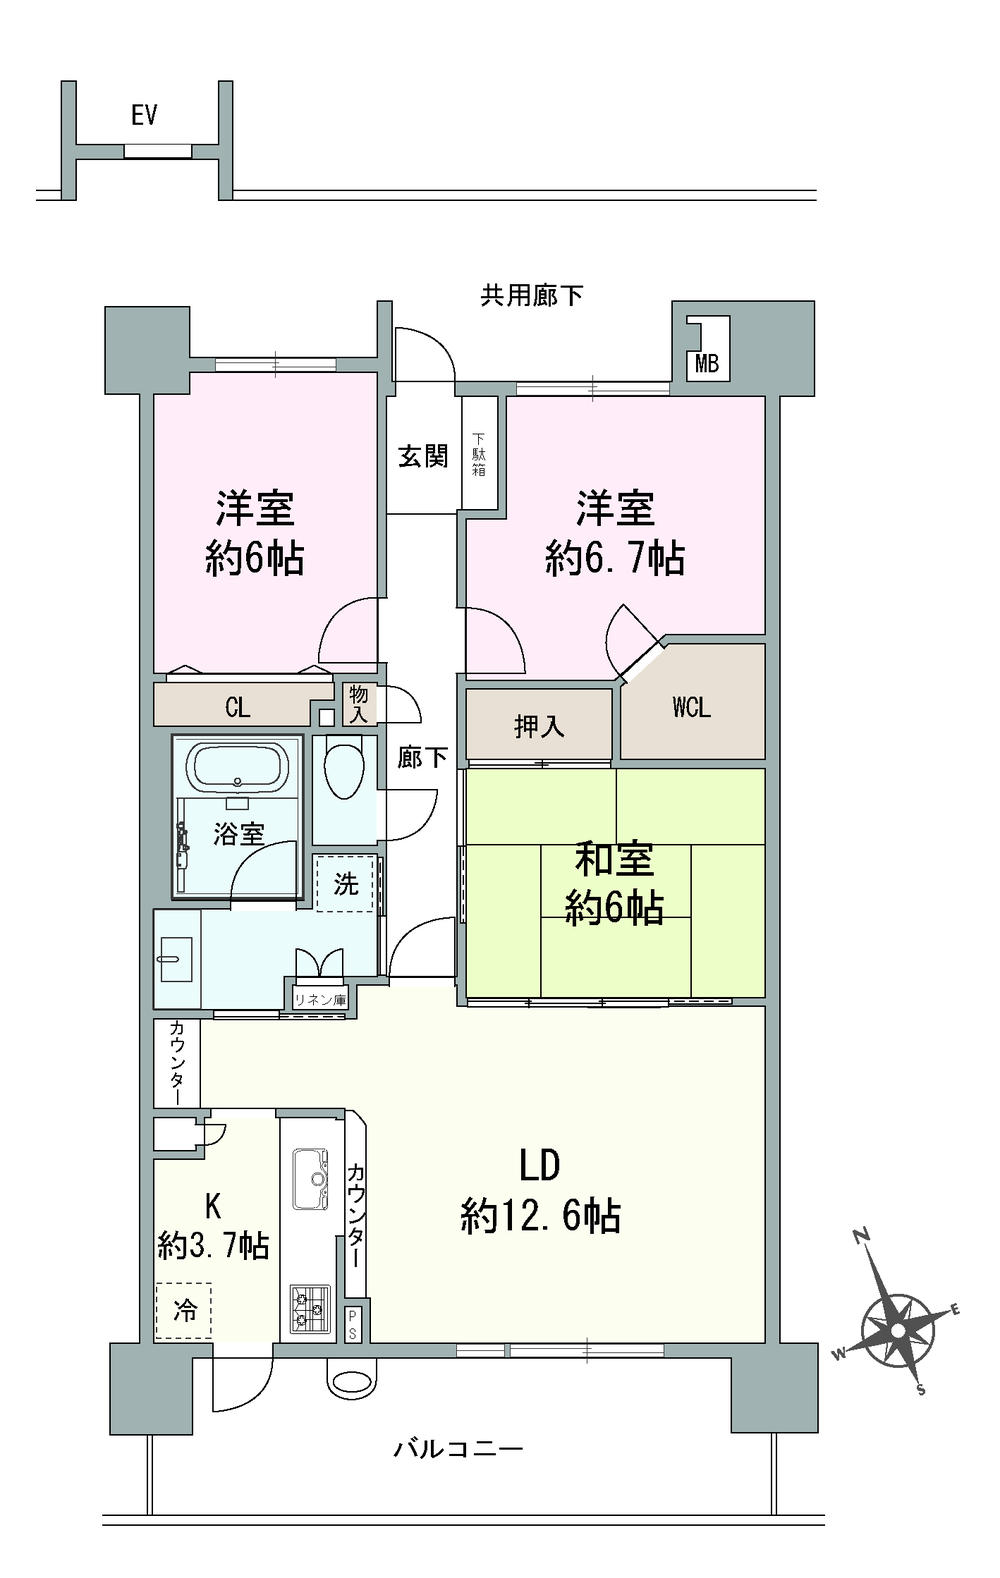 Floor plan. 3LDK, Price 15.8 million yen, Occupied area 81.22 sq m , Balcony area 14.6 sq m